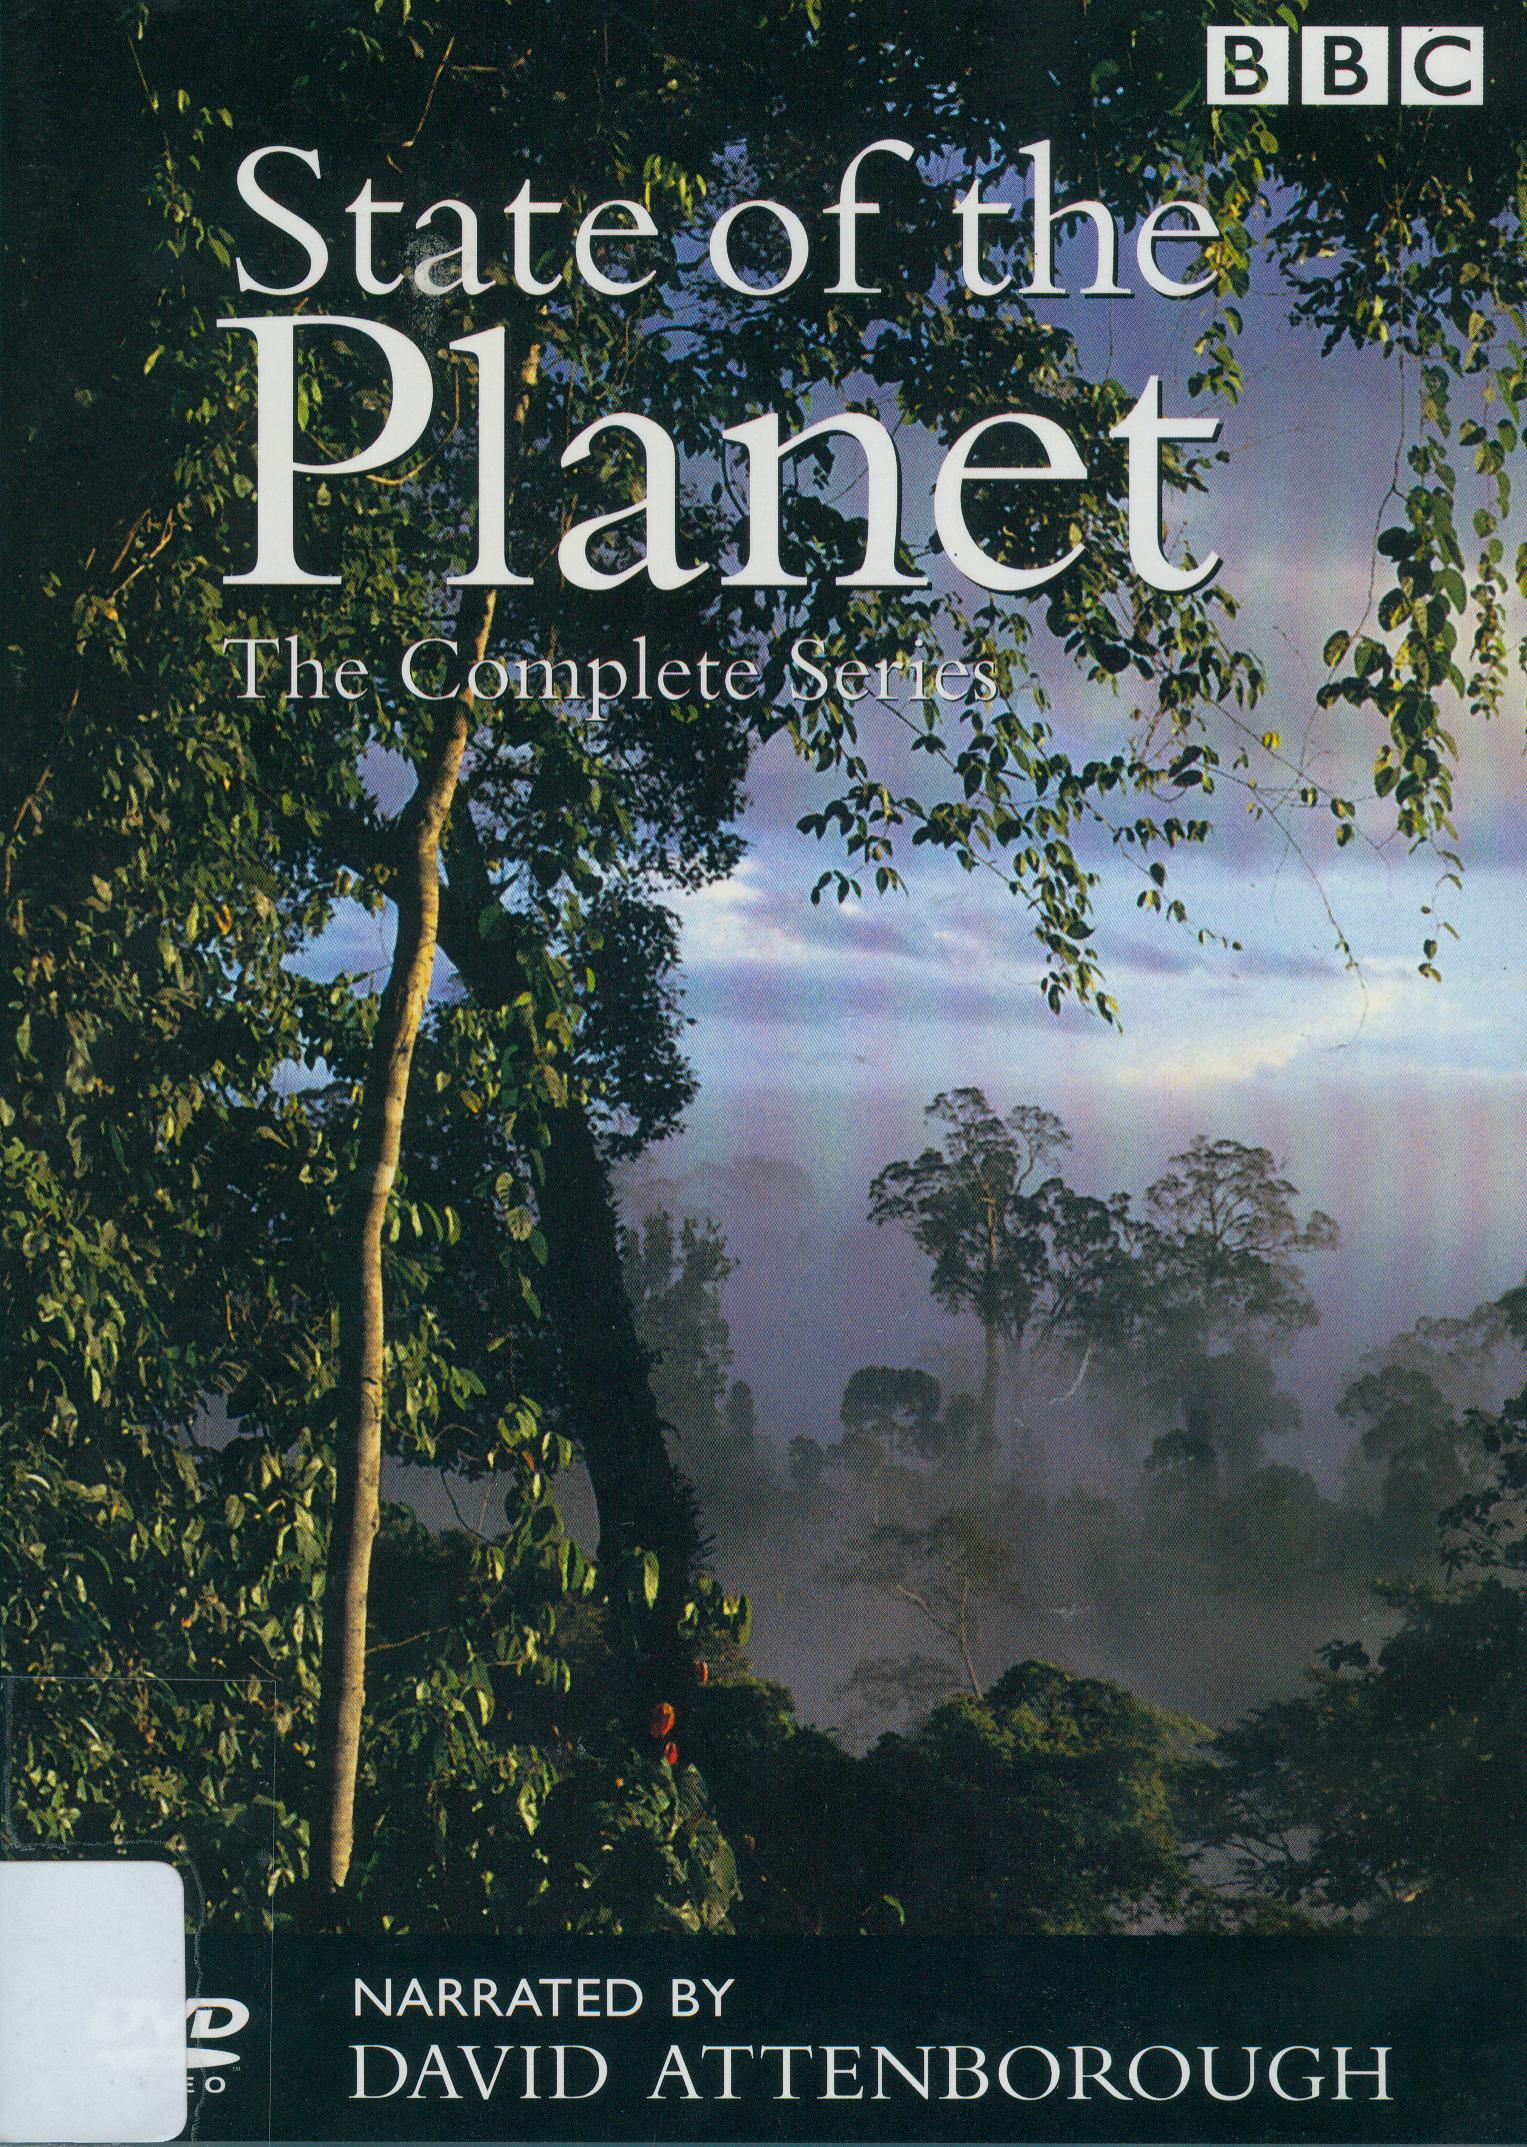 地球科學系列套裝[5] : 大地的聲音 = The earth series : state of planet